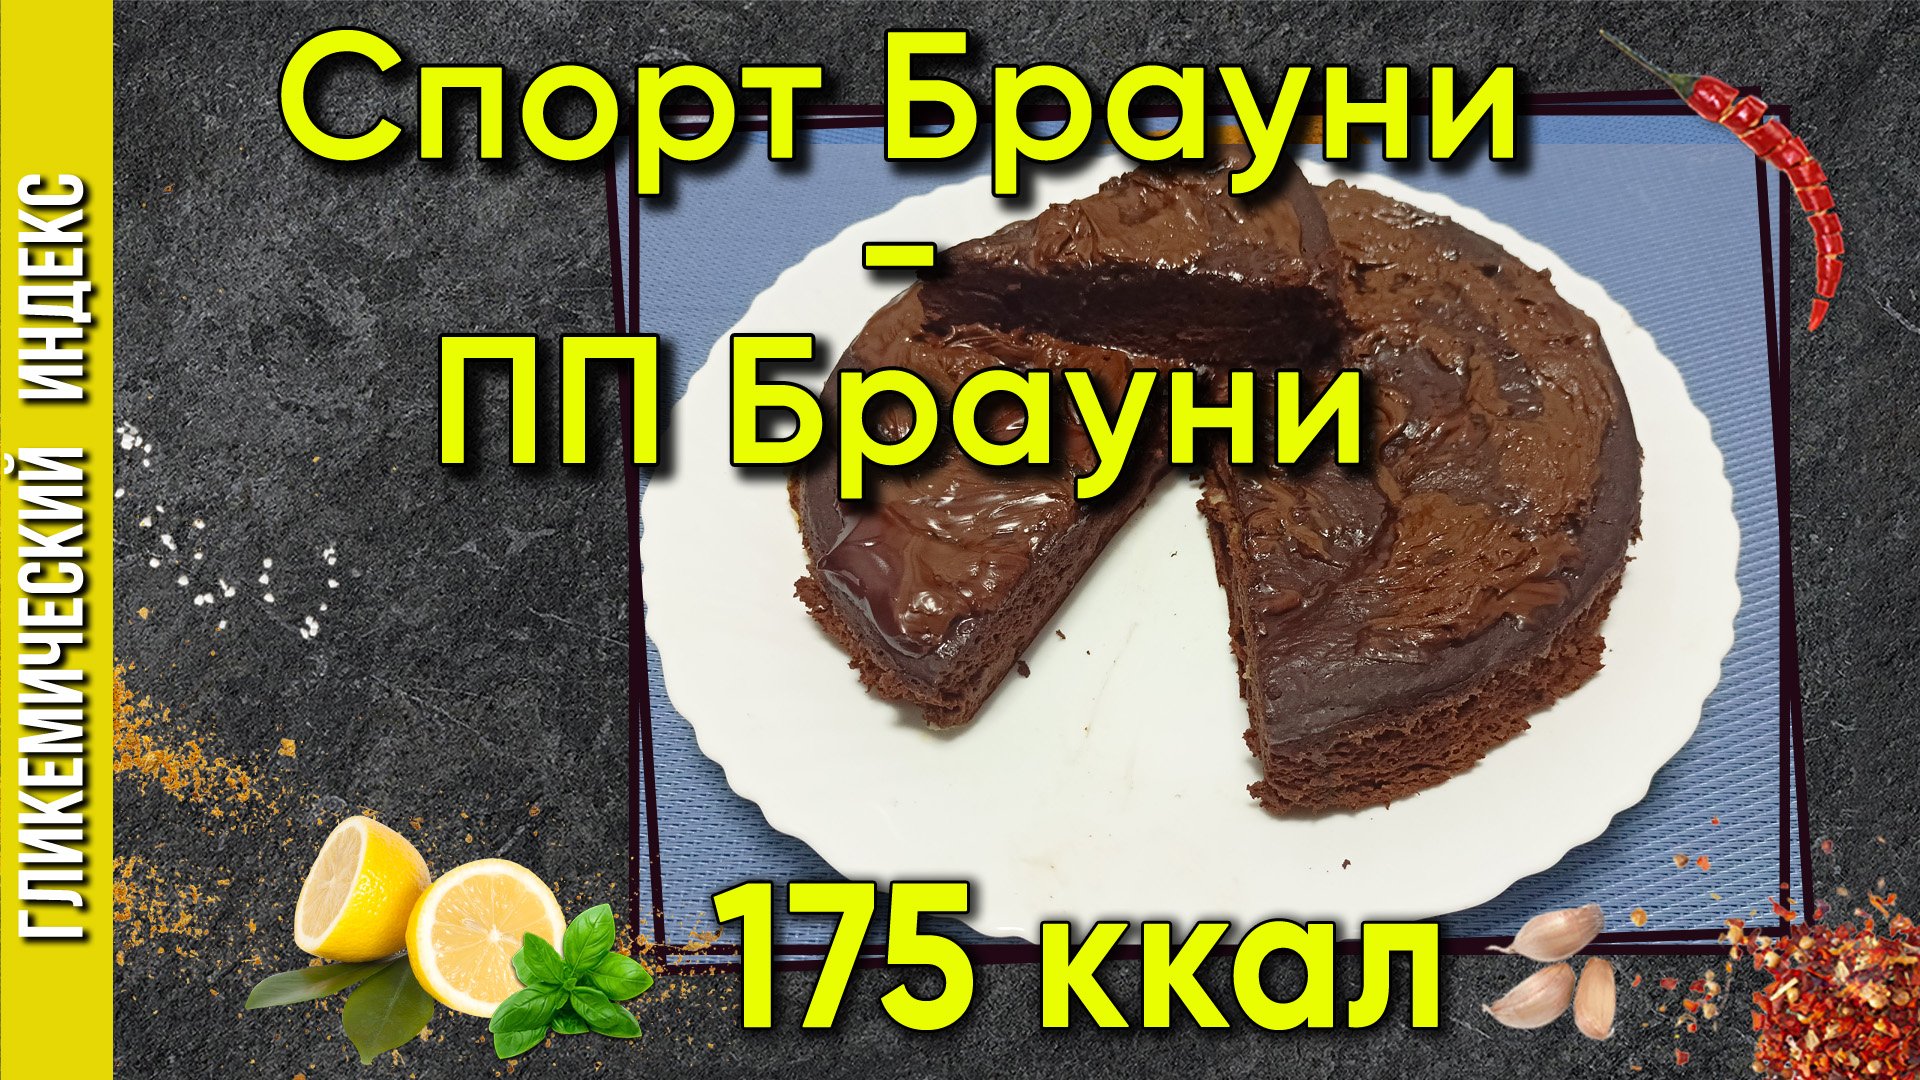 Спорт Брауни / ПП Брауни - рецепт десерта в мультиварке